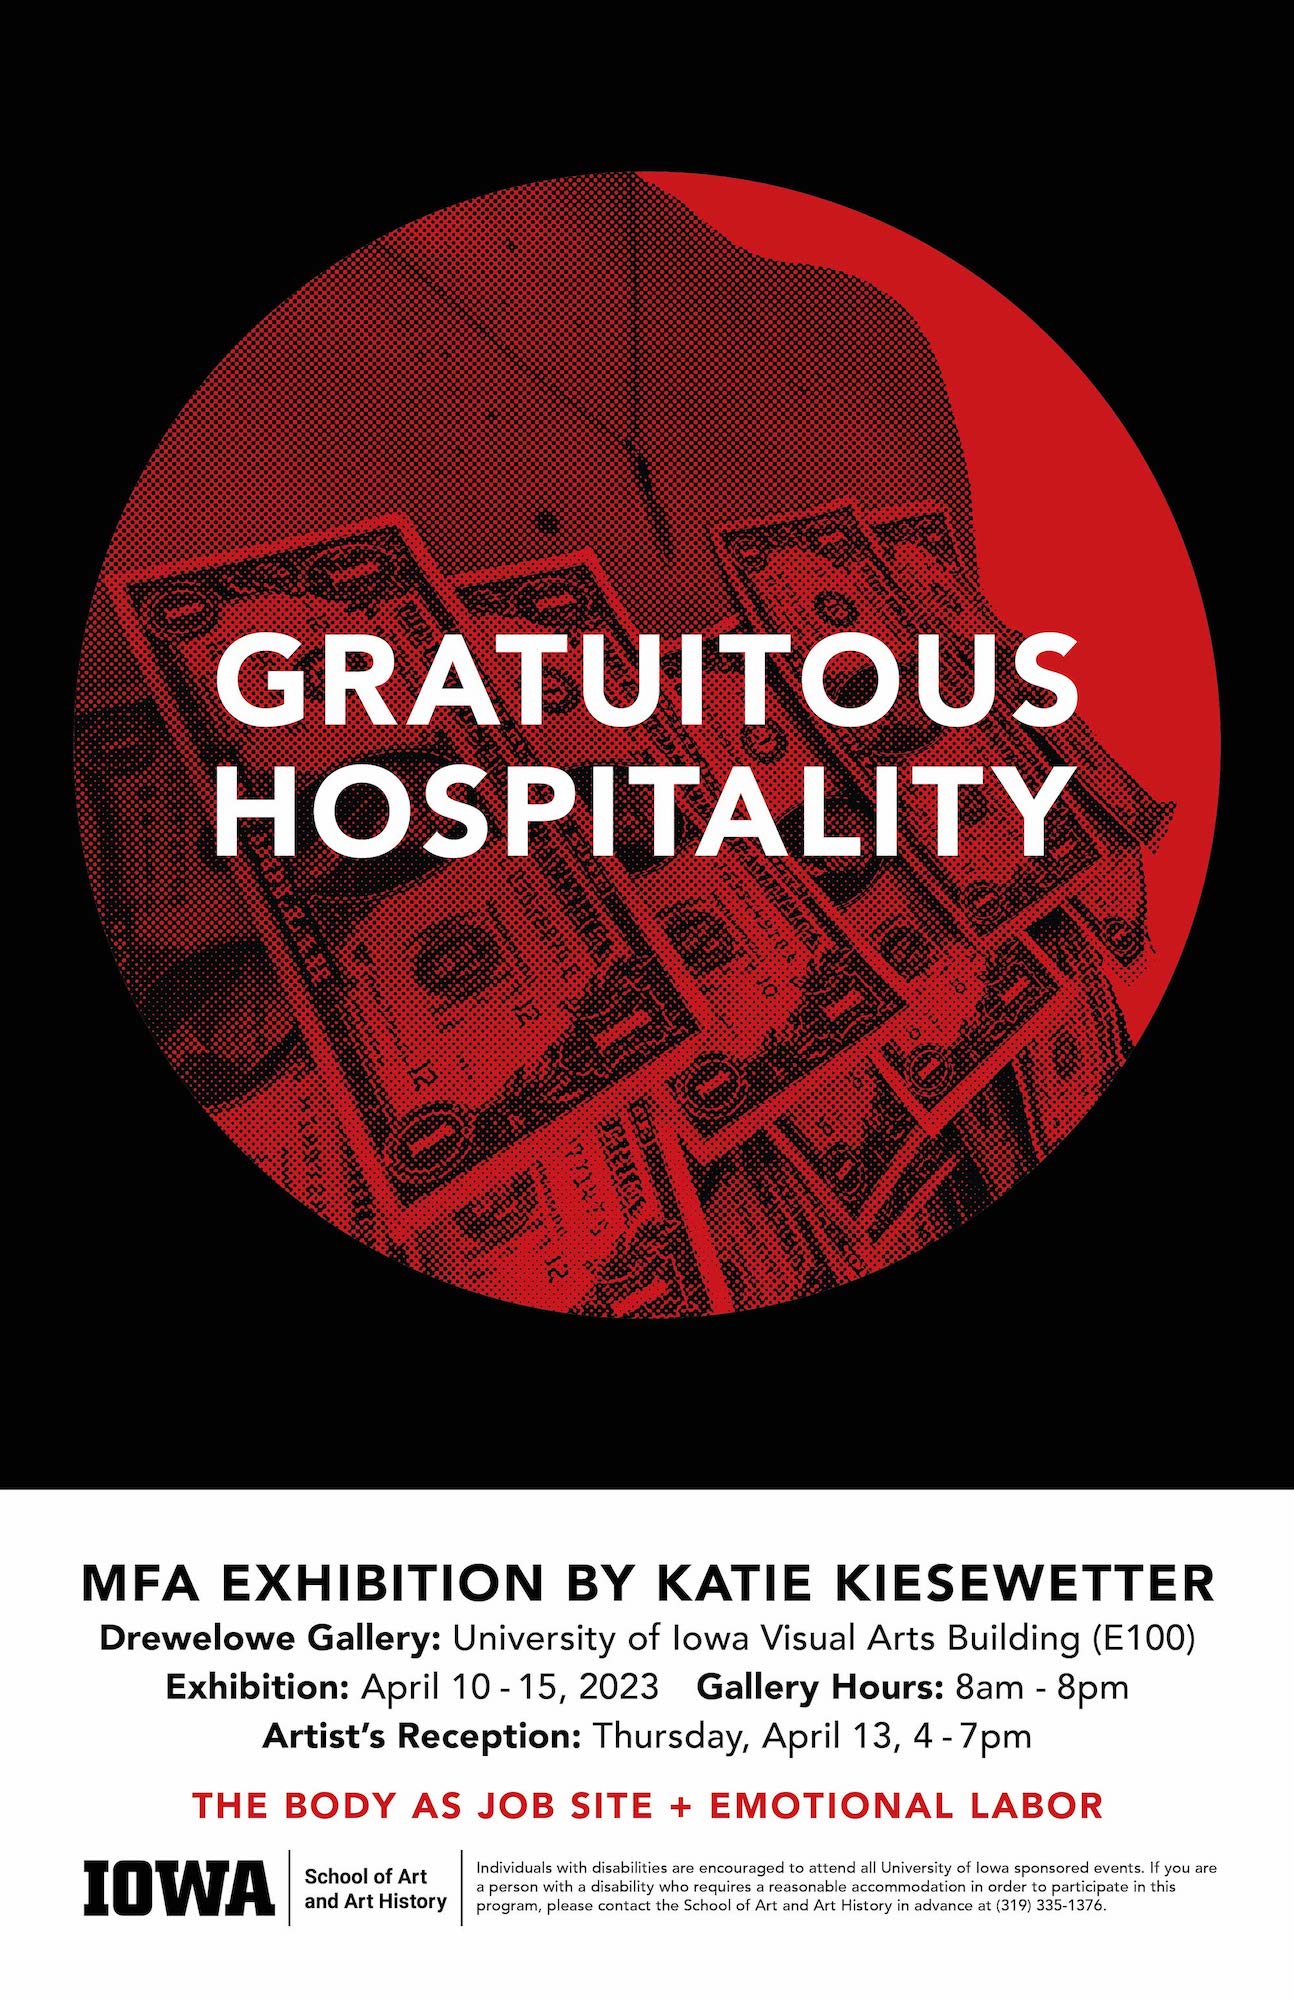 Gratuitous Hospitality MFA Exhibition by Katie Kiesewetter E100 (Drewelowe Gallery) April 10, 2023 - April 14, 2023 8:00am - 8:00pm Reception Thursday April 13, 2023 4:00-7:00pm The Body as Job site + Emotional Labor